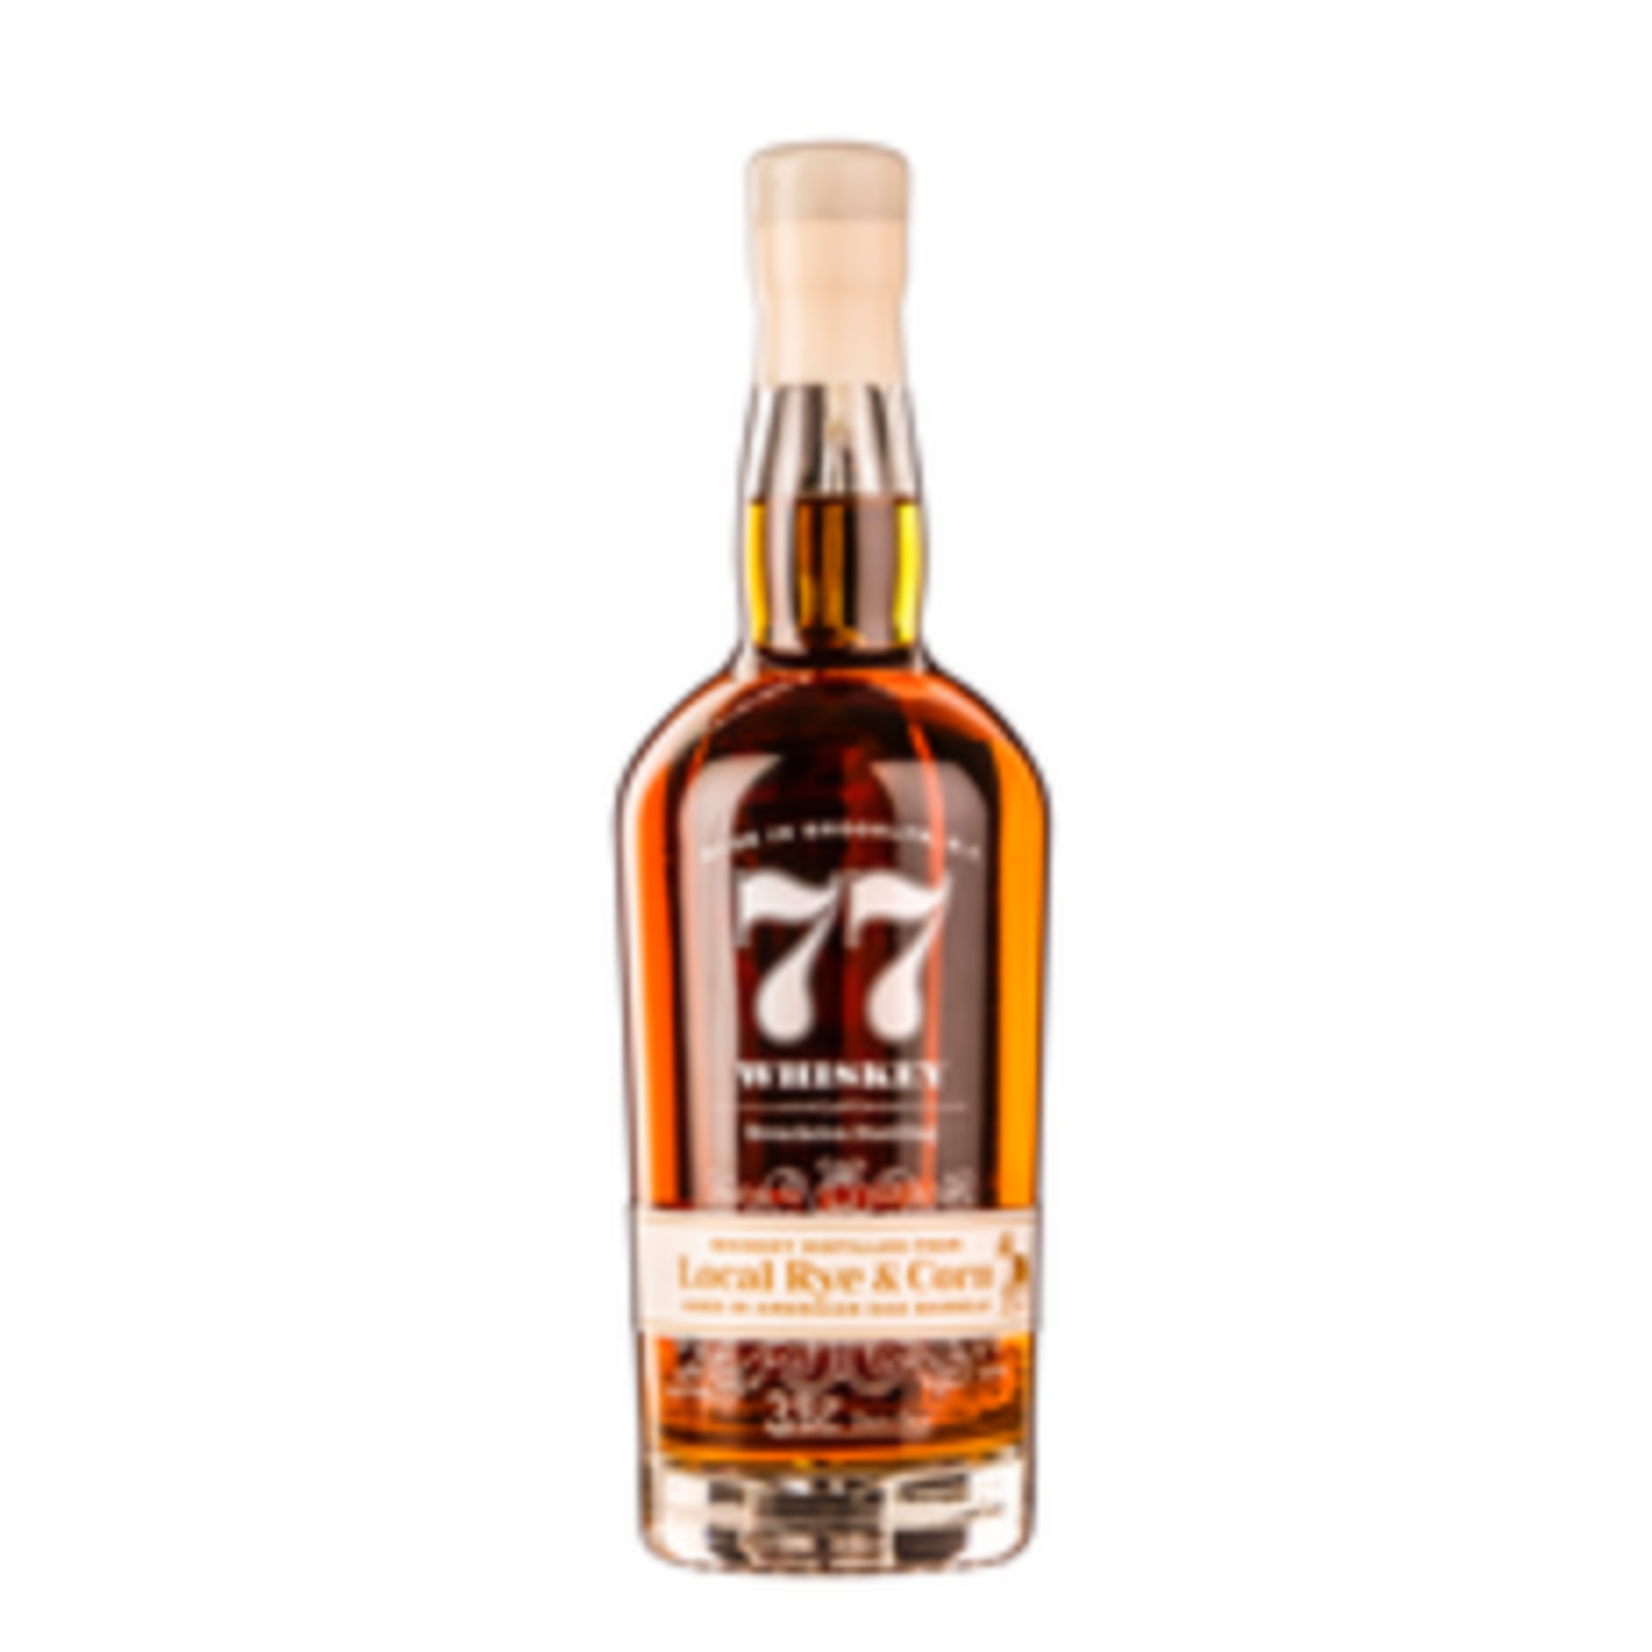 77 Whiskey, Local Rye and Corn - 750ml